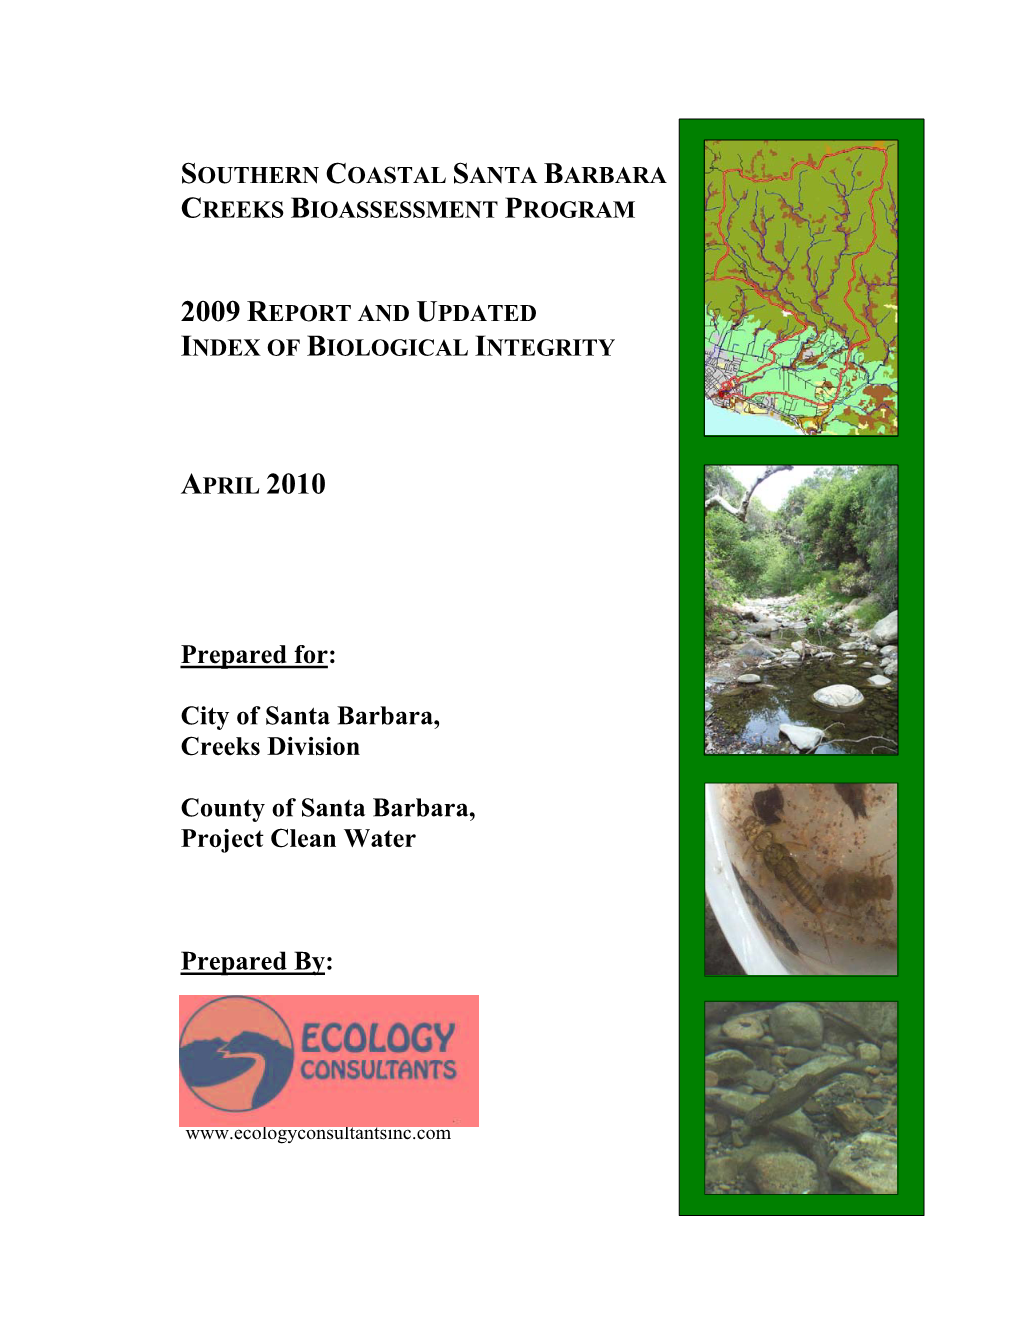 Southern Coastal Santa Barbara Creeks Bioassessment Program 2009